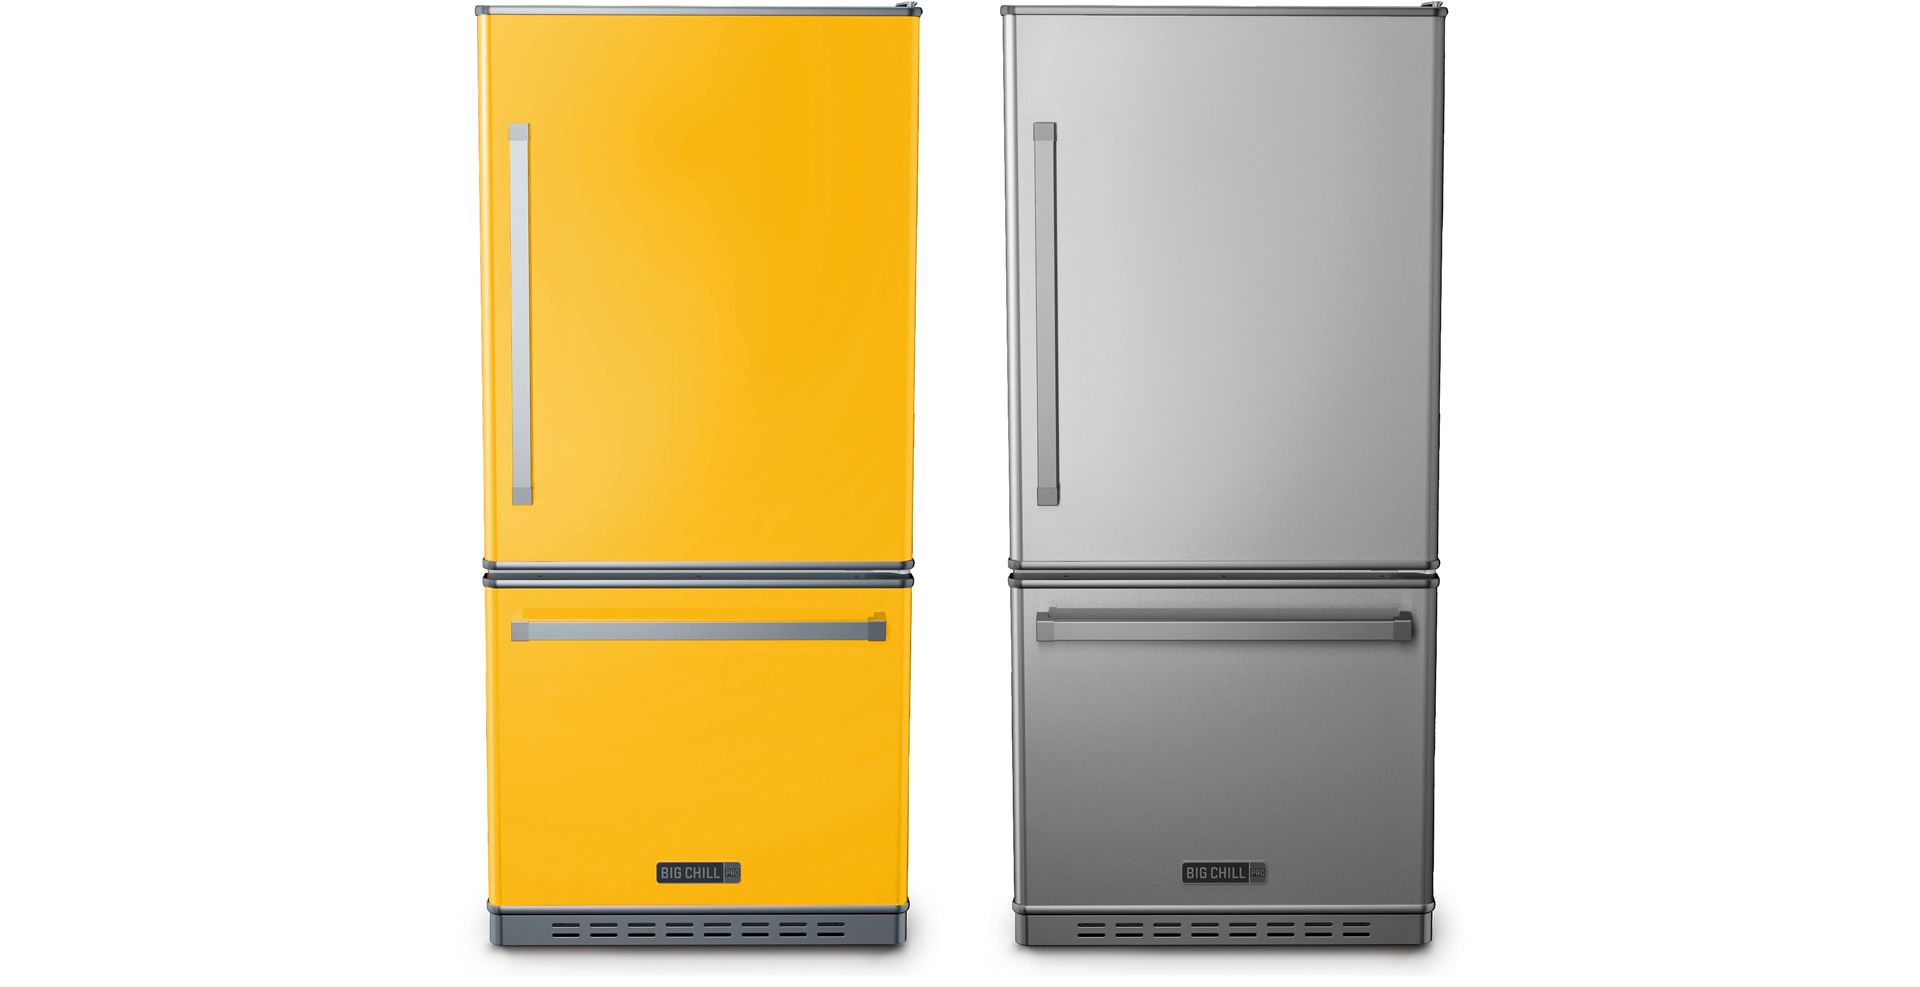 Big Chill Pro Refrigerators